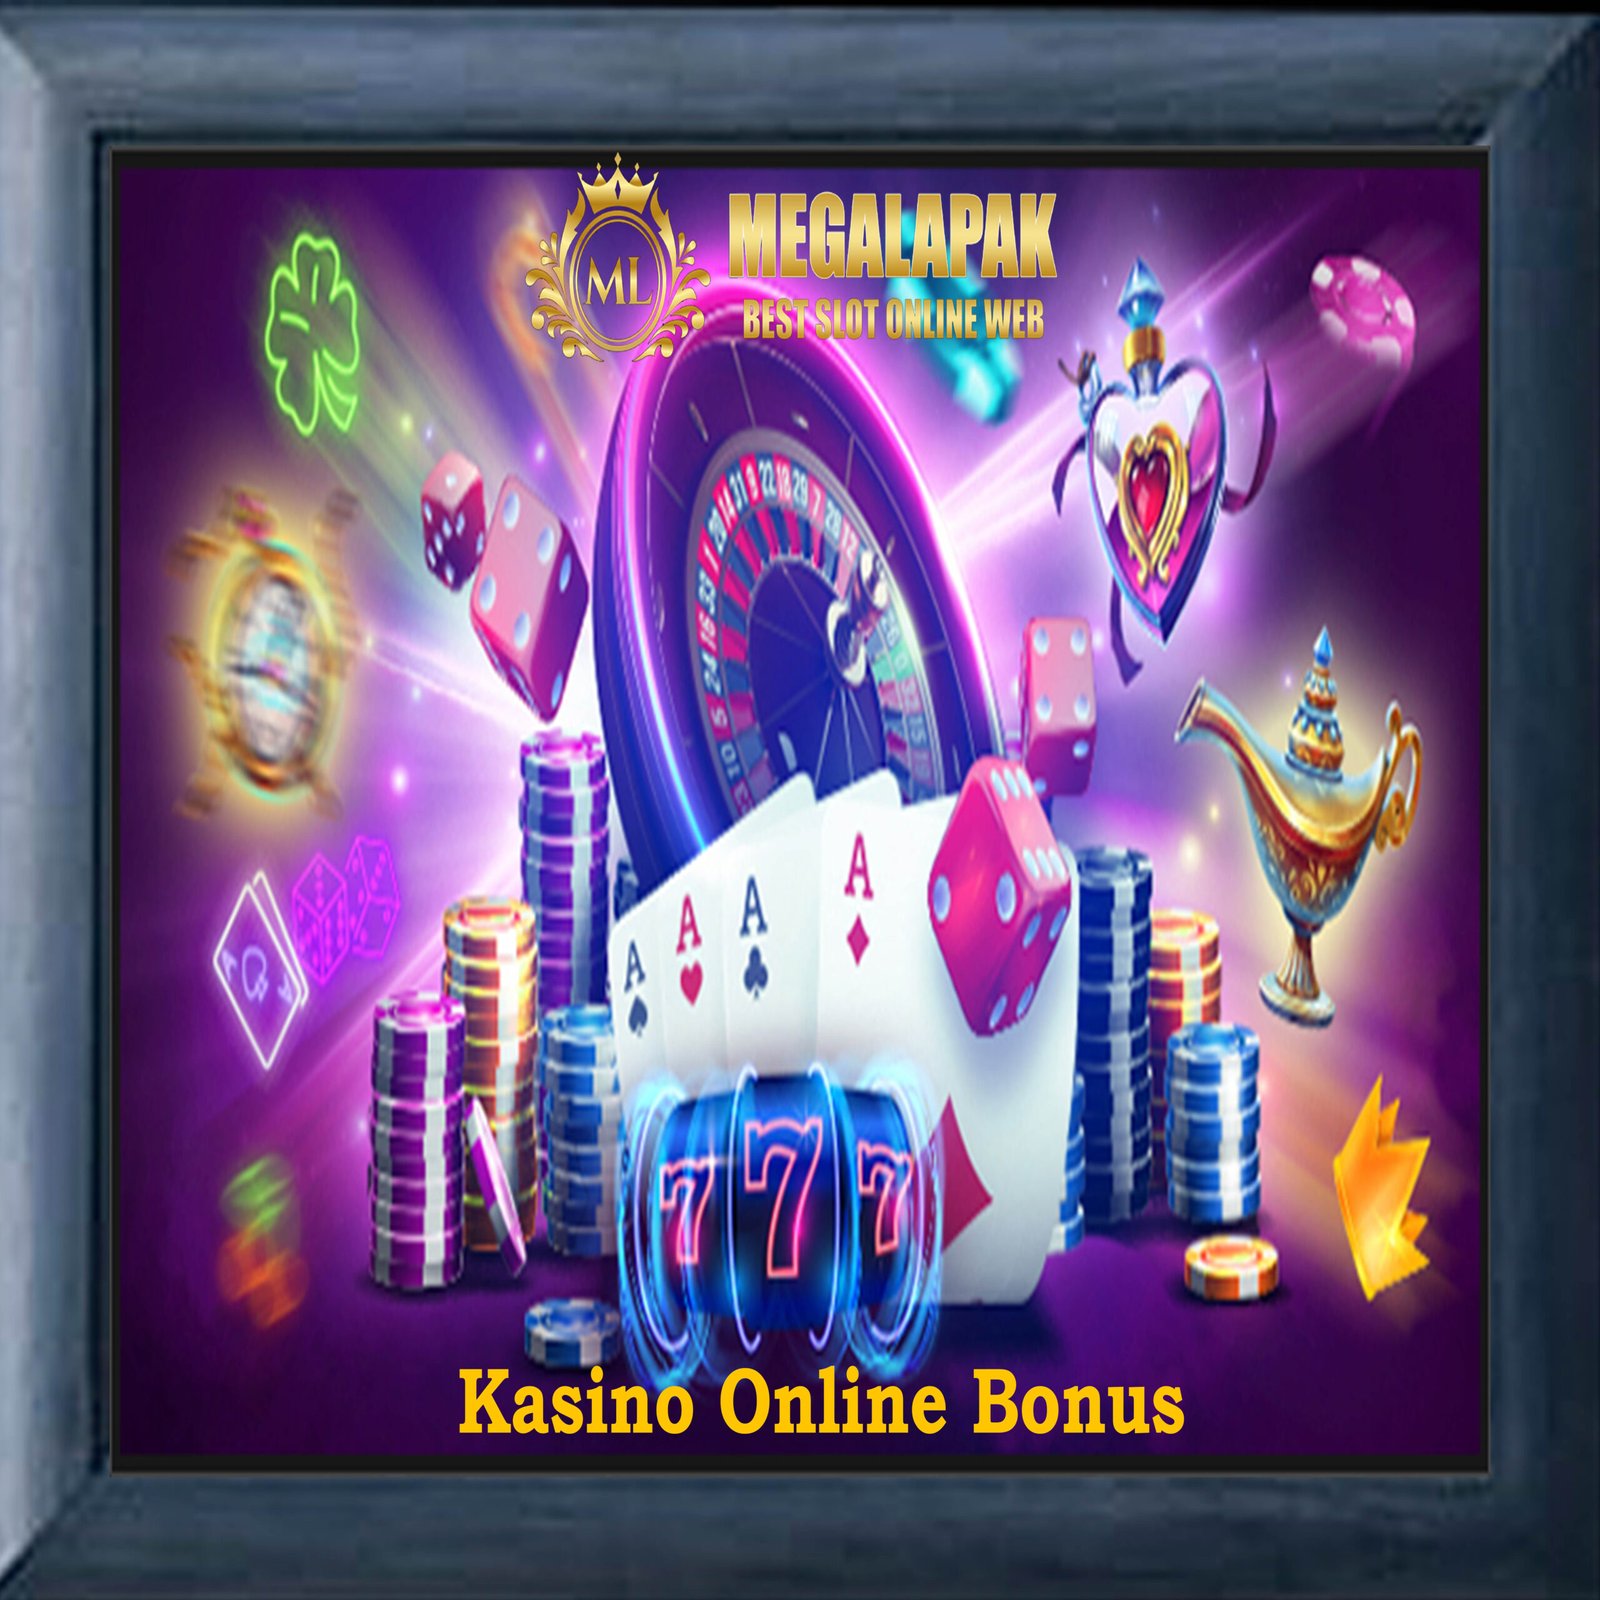 Kasino Online Bonus Megalapak